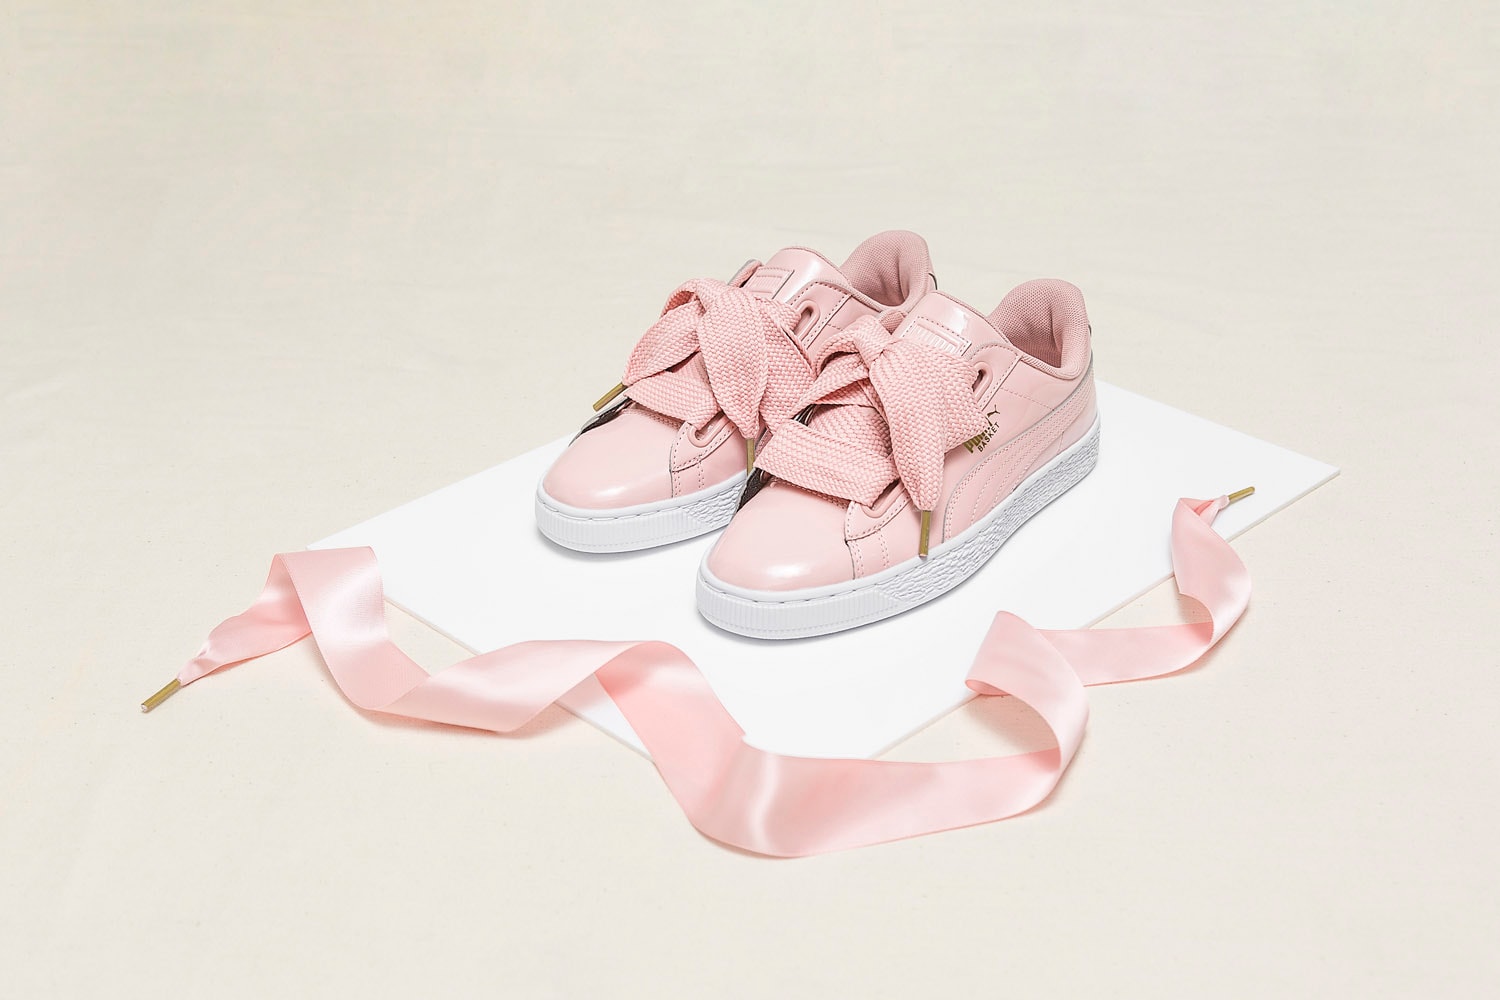 PUMA Basket Heart Patent Pink Grey Colorway Sneaker Silhouette HBX